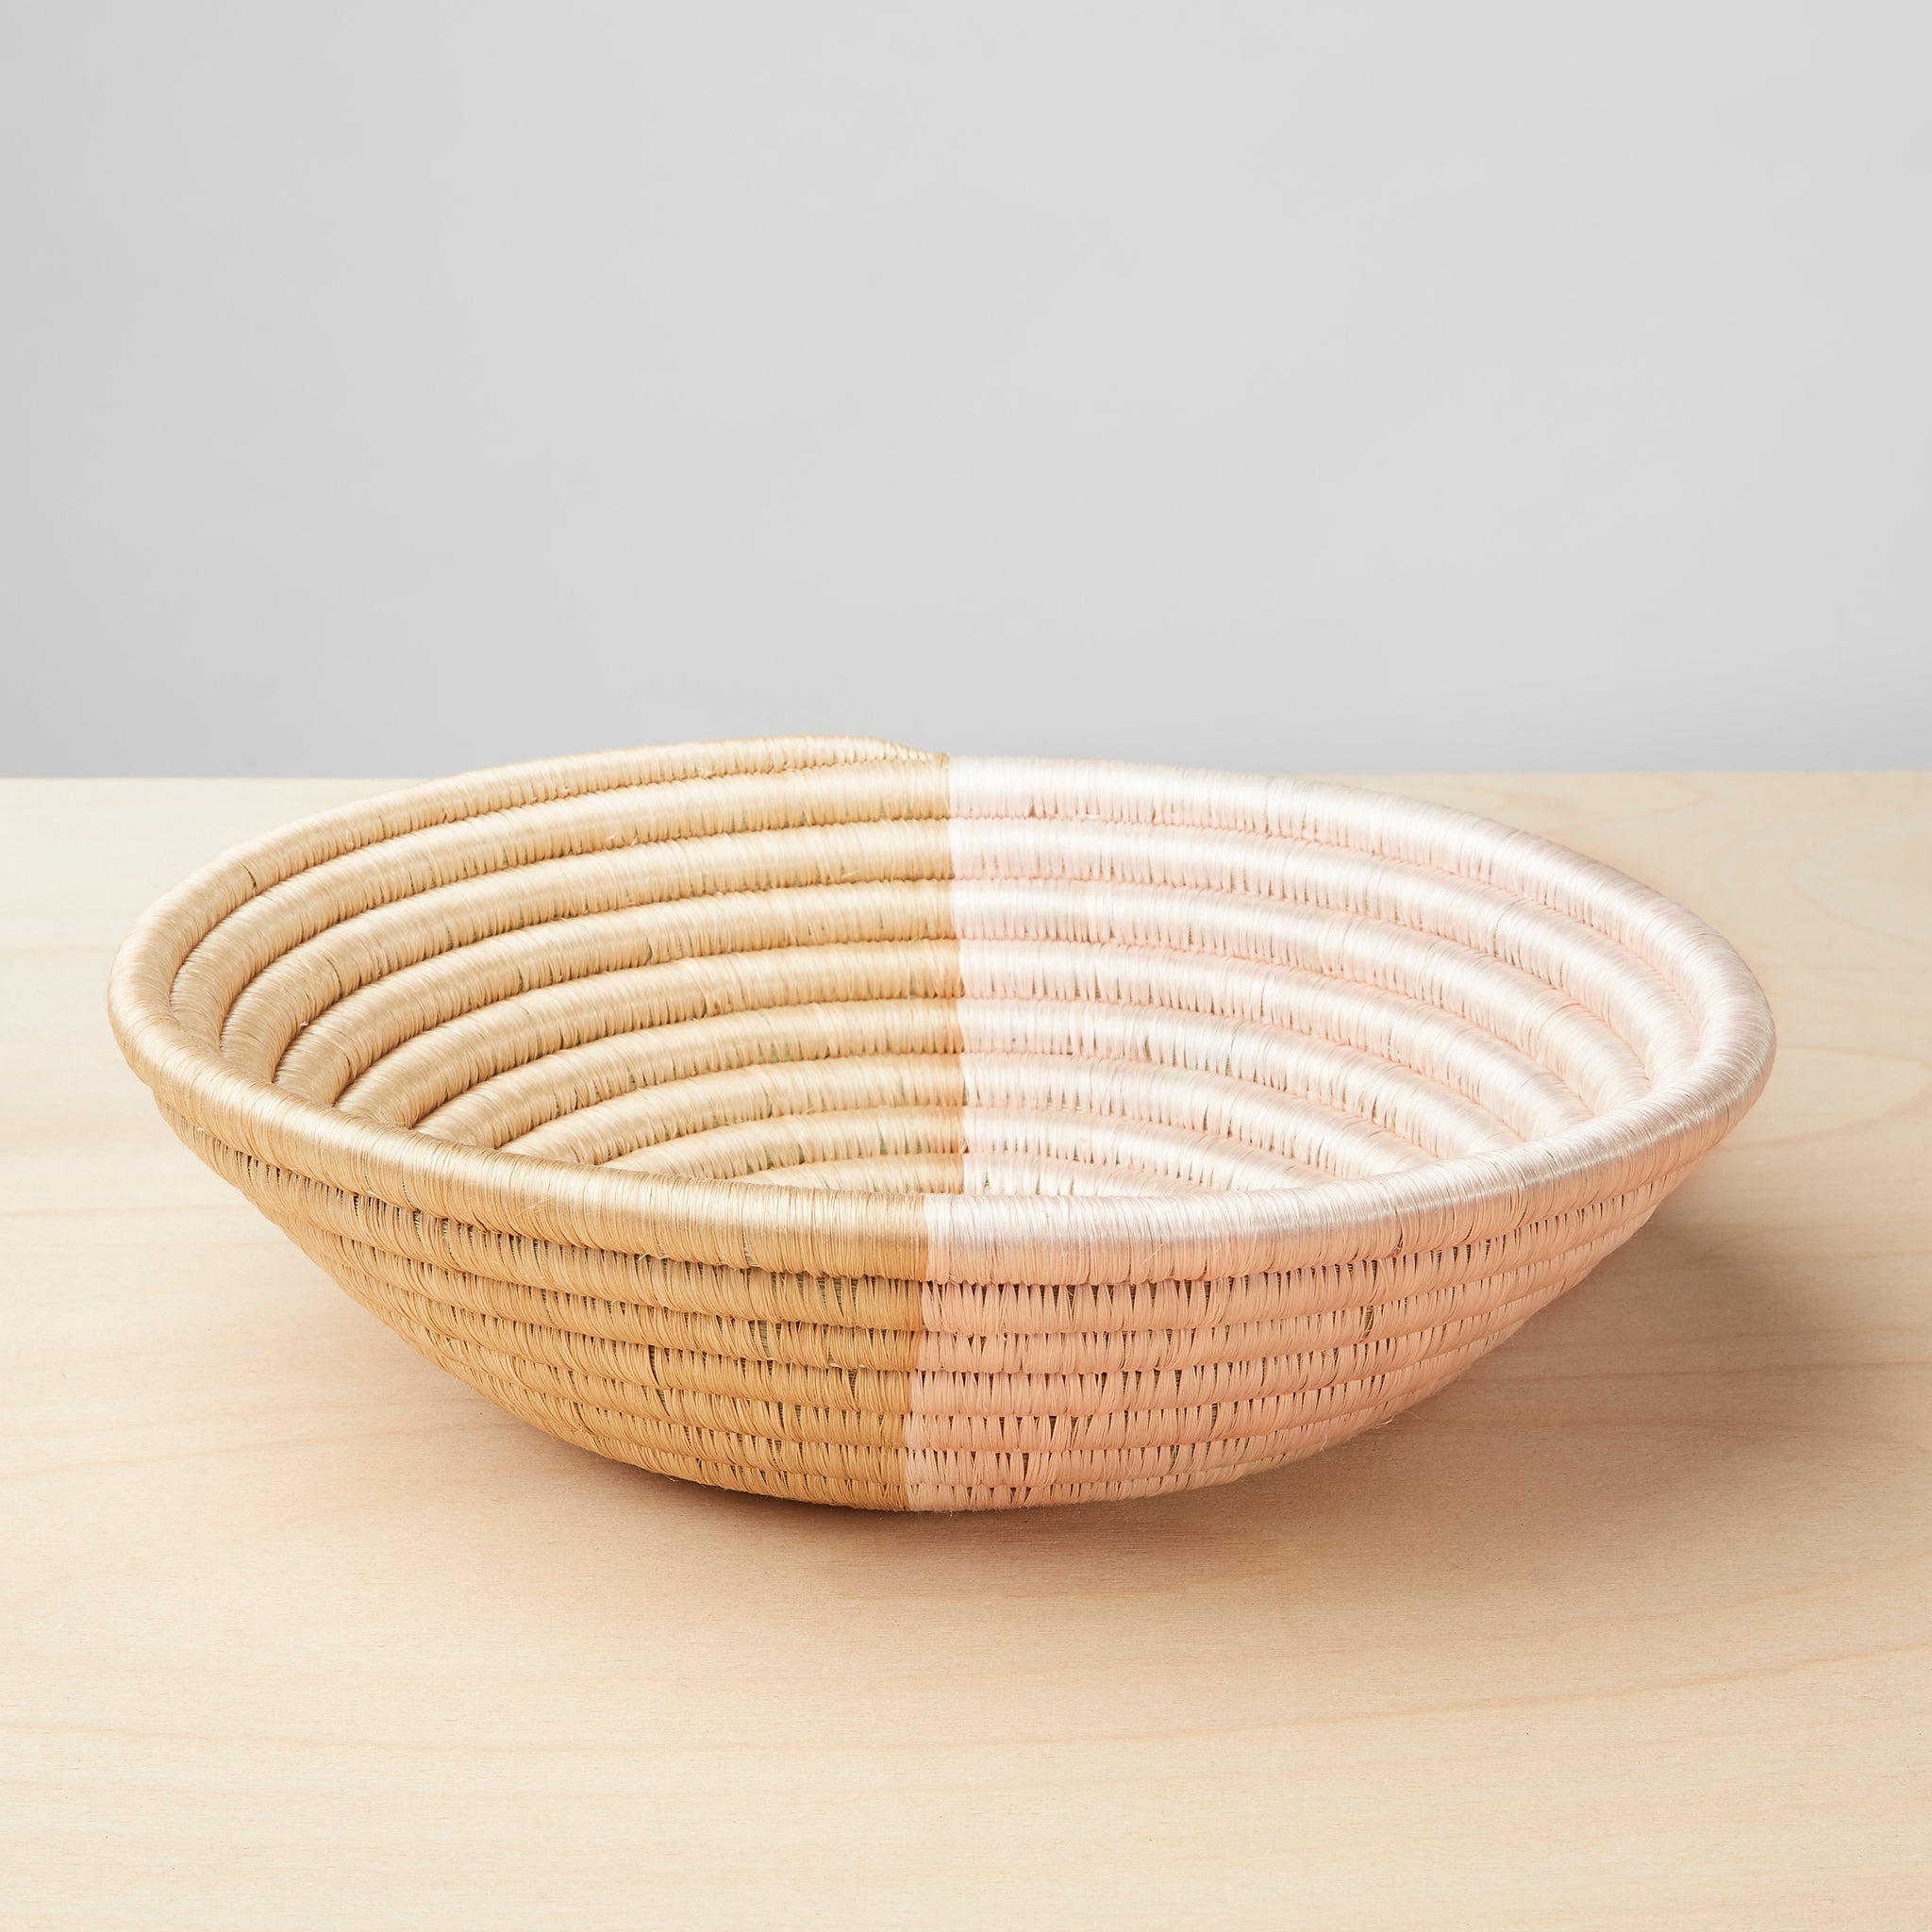 Akeza wall plate and basket bowl - By Native